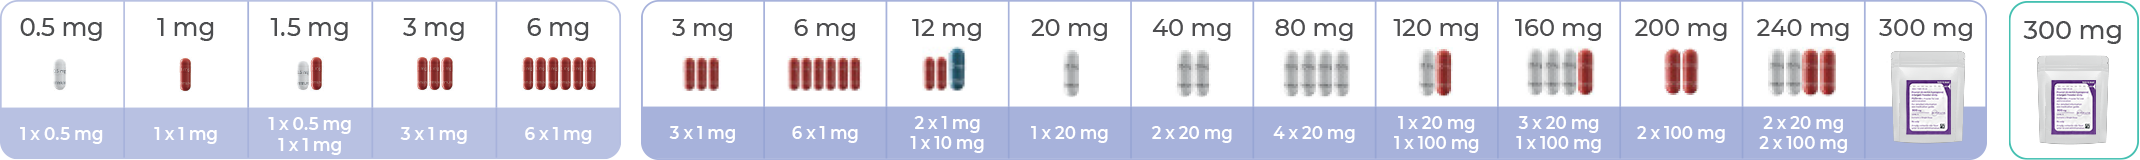 Gradually increasing dosage by milligram illustration